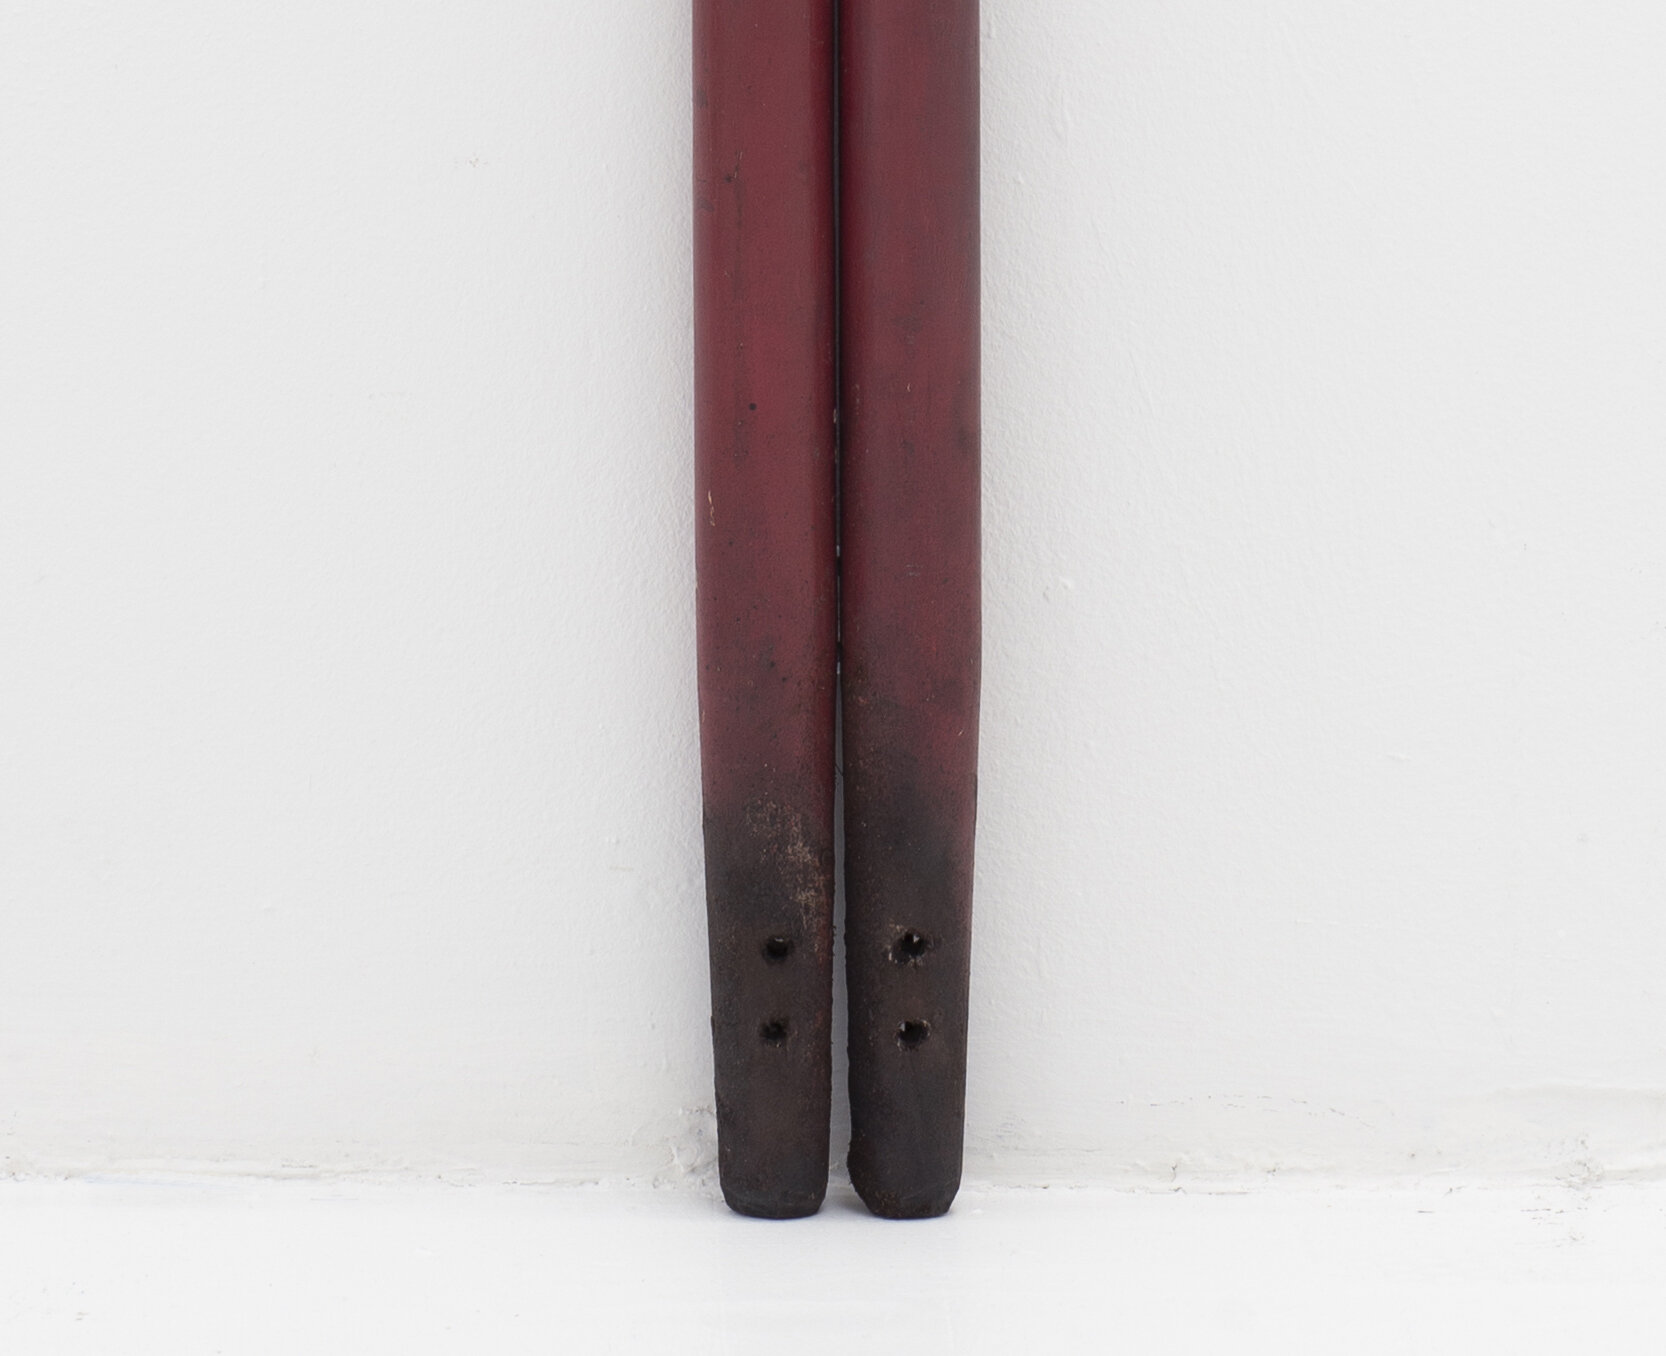  Jonathan Mildenberg  Untitled (Father and son) , 2020 (detail) wood shovel handles, paint, tape, dirt, ash,  blood, pigment, bone, flock, wire, hardware 46 x 3 x 1.5 inches (117 x 8 x 4 cm) JM10 